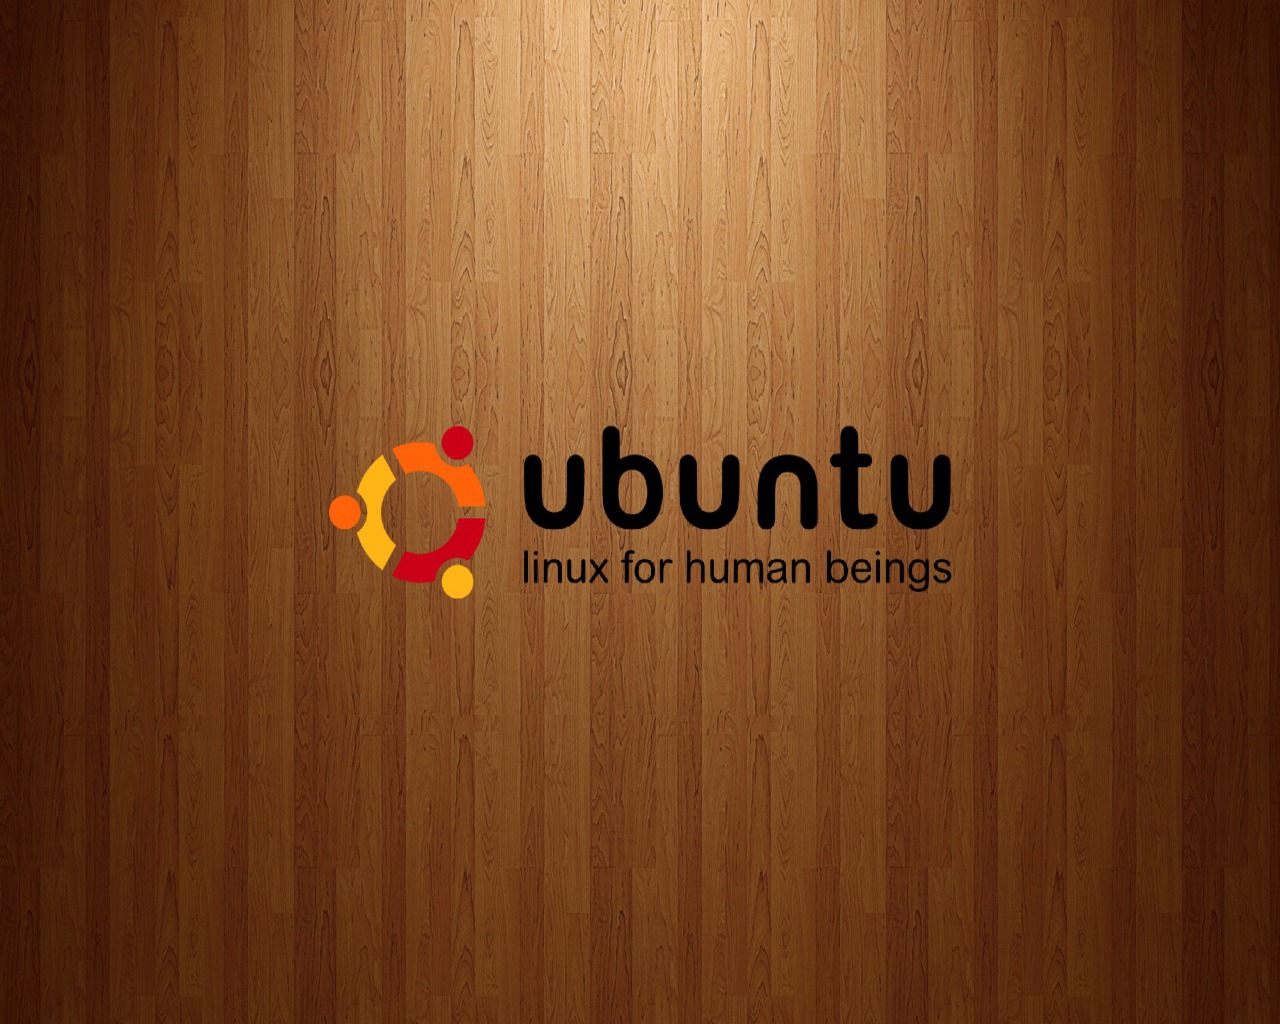 Ubuntu Hd Wallpaper - Wallpapers High Definition